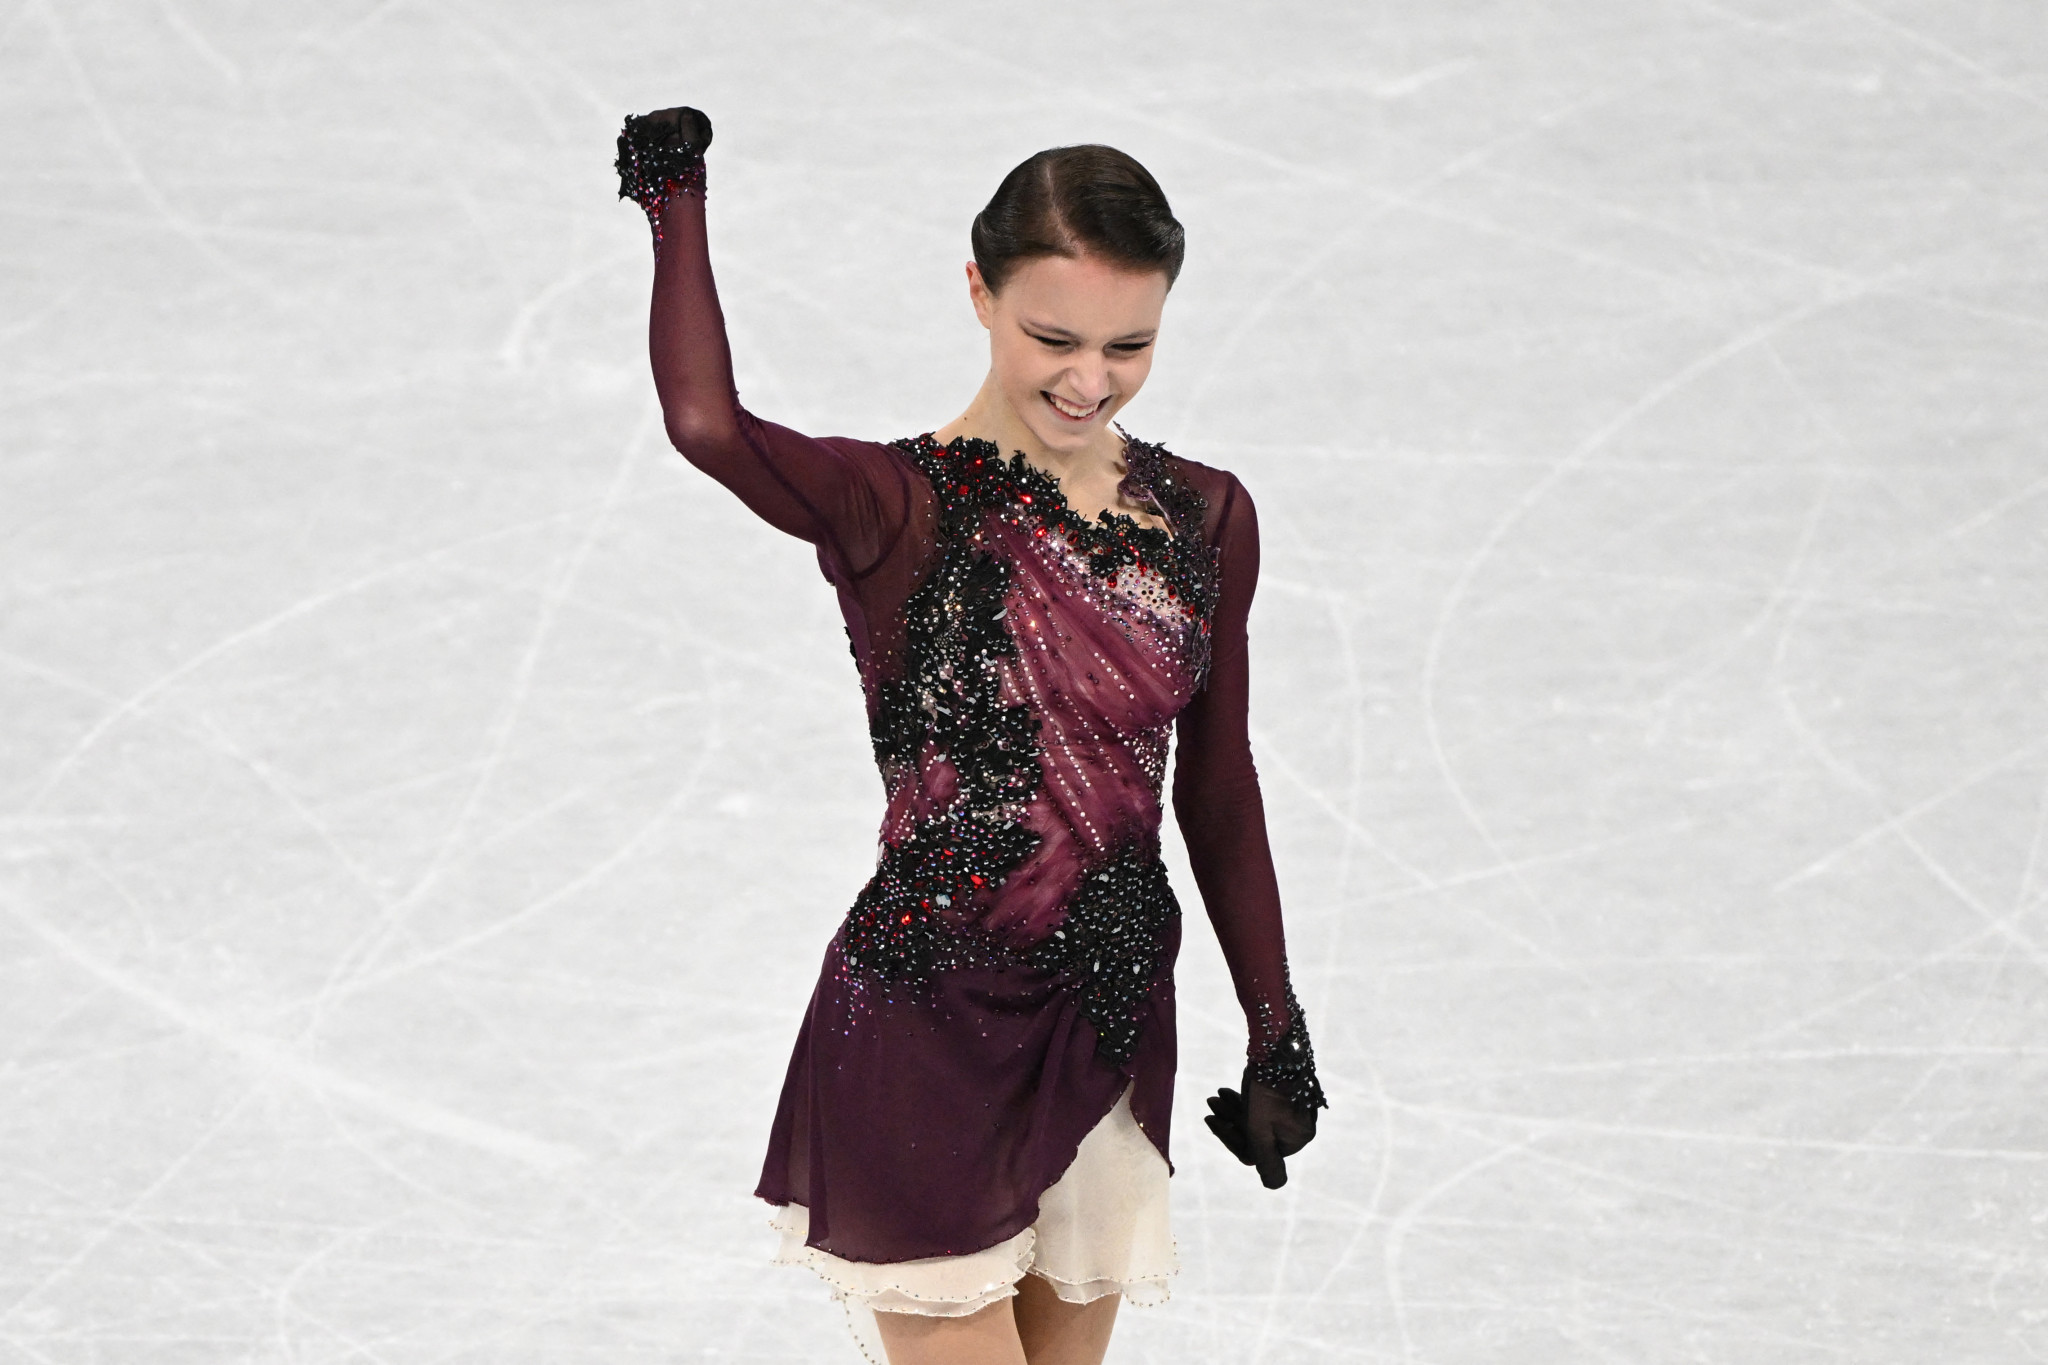 Shcherbakova wins women's figure skating gold at Beijing 2022 as Valieva misses medals